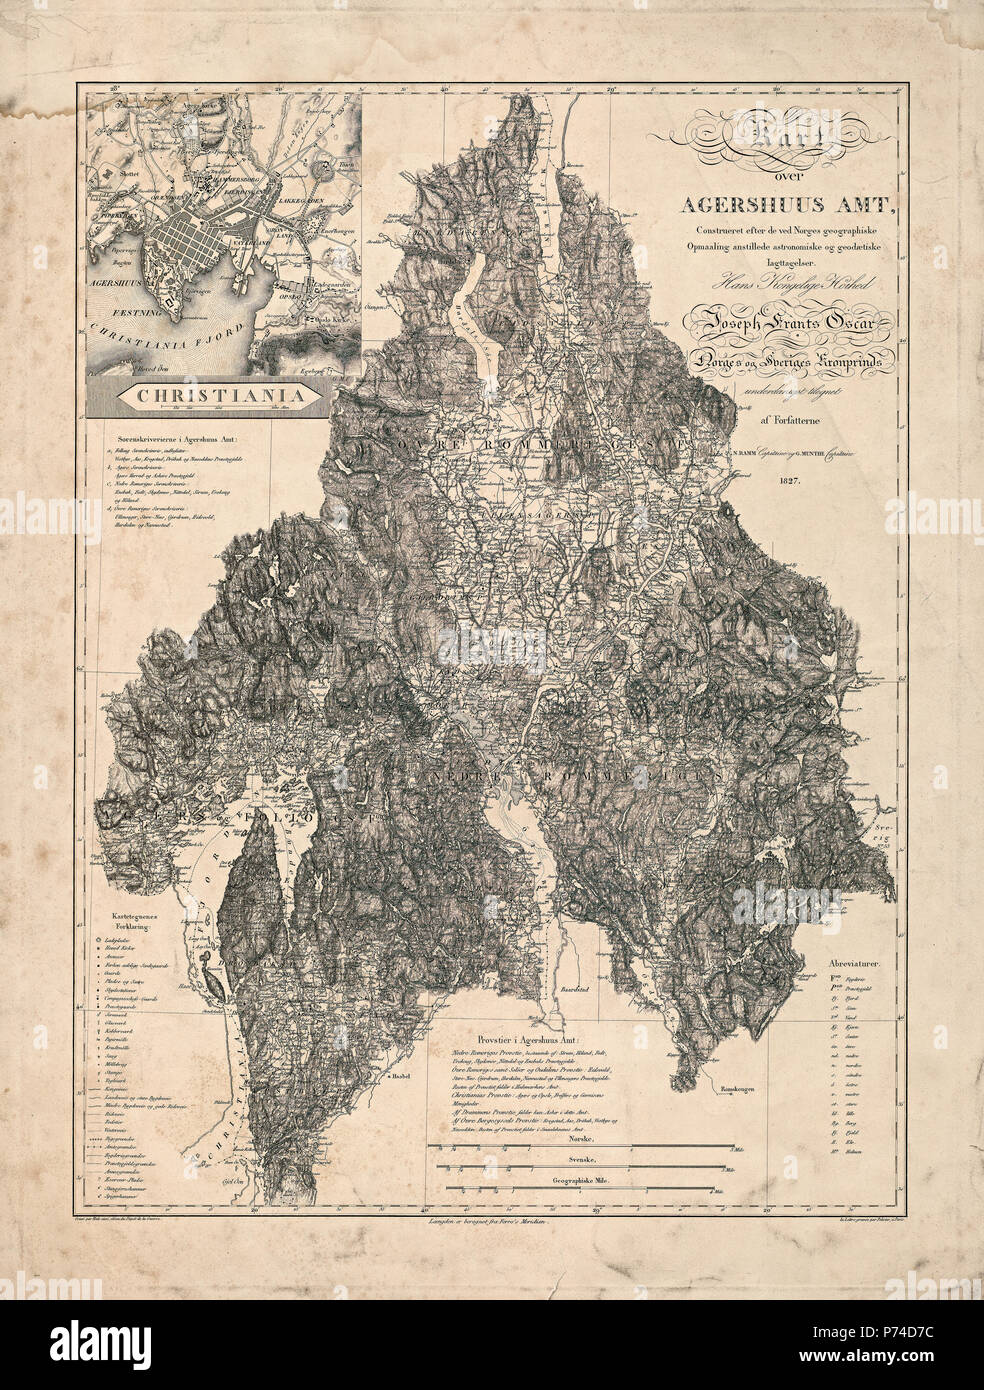 Ramm og Munthes kart over Akershus amt, 1827 - Ramm and Munthes map of Akershus county, 1827 Cartographer N. Ramm og G. Munthe Stock Photo